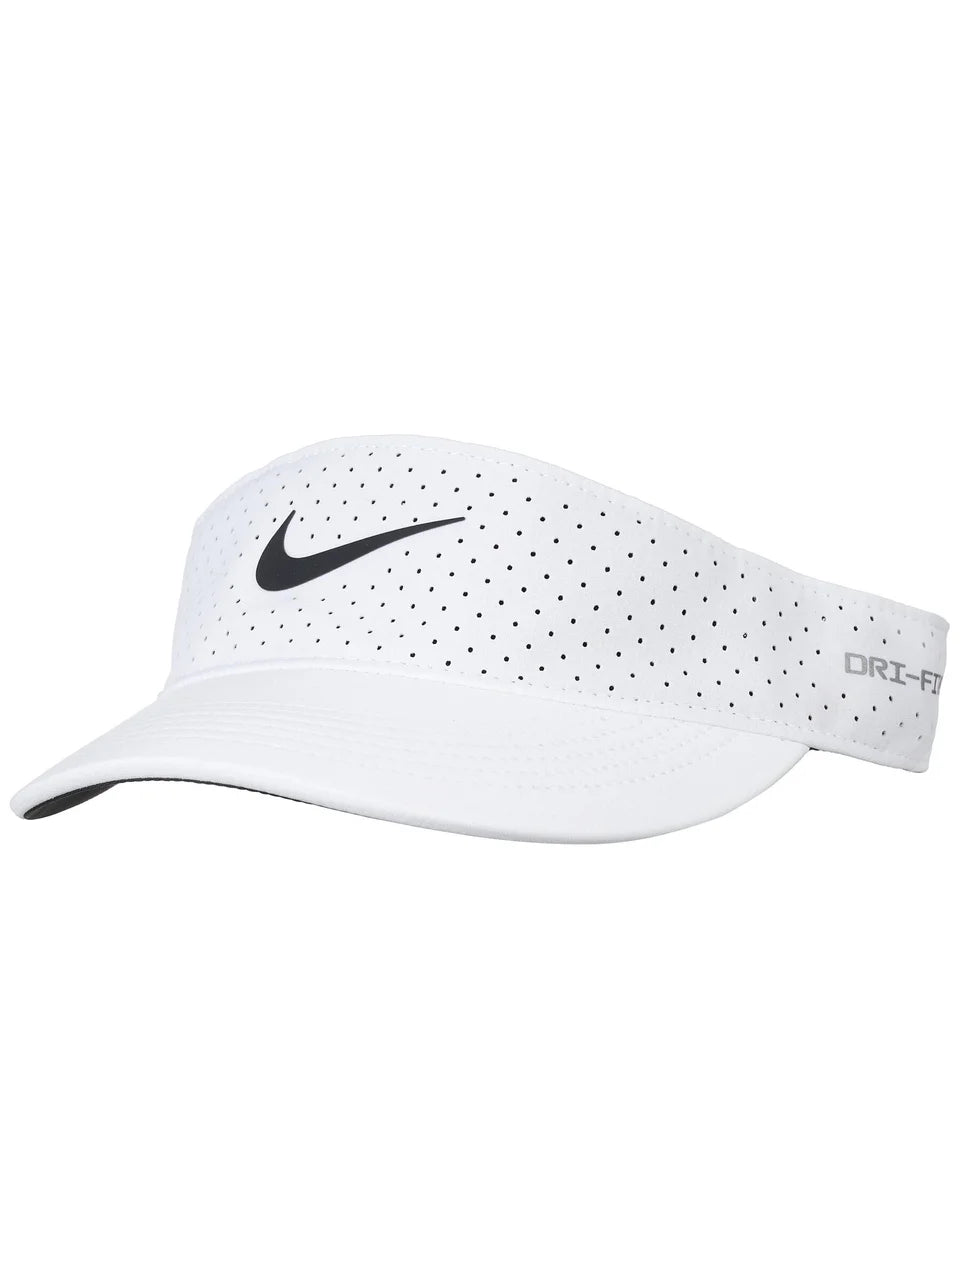 Adult Nike Unisex Dri-Fit Advantage Ace Visor